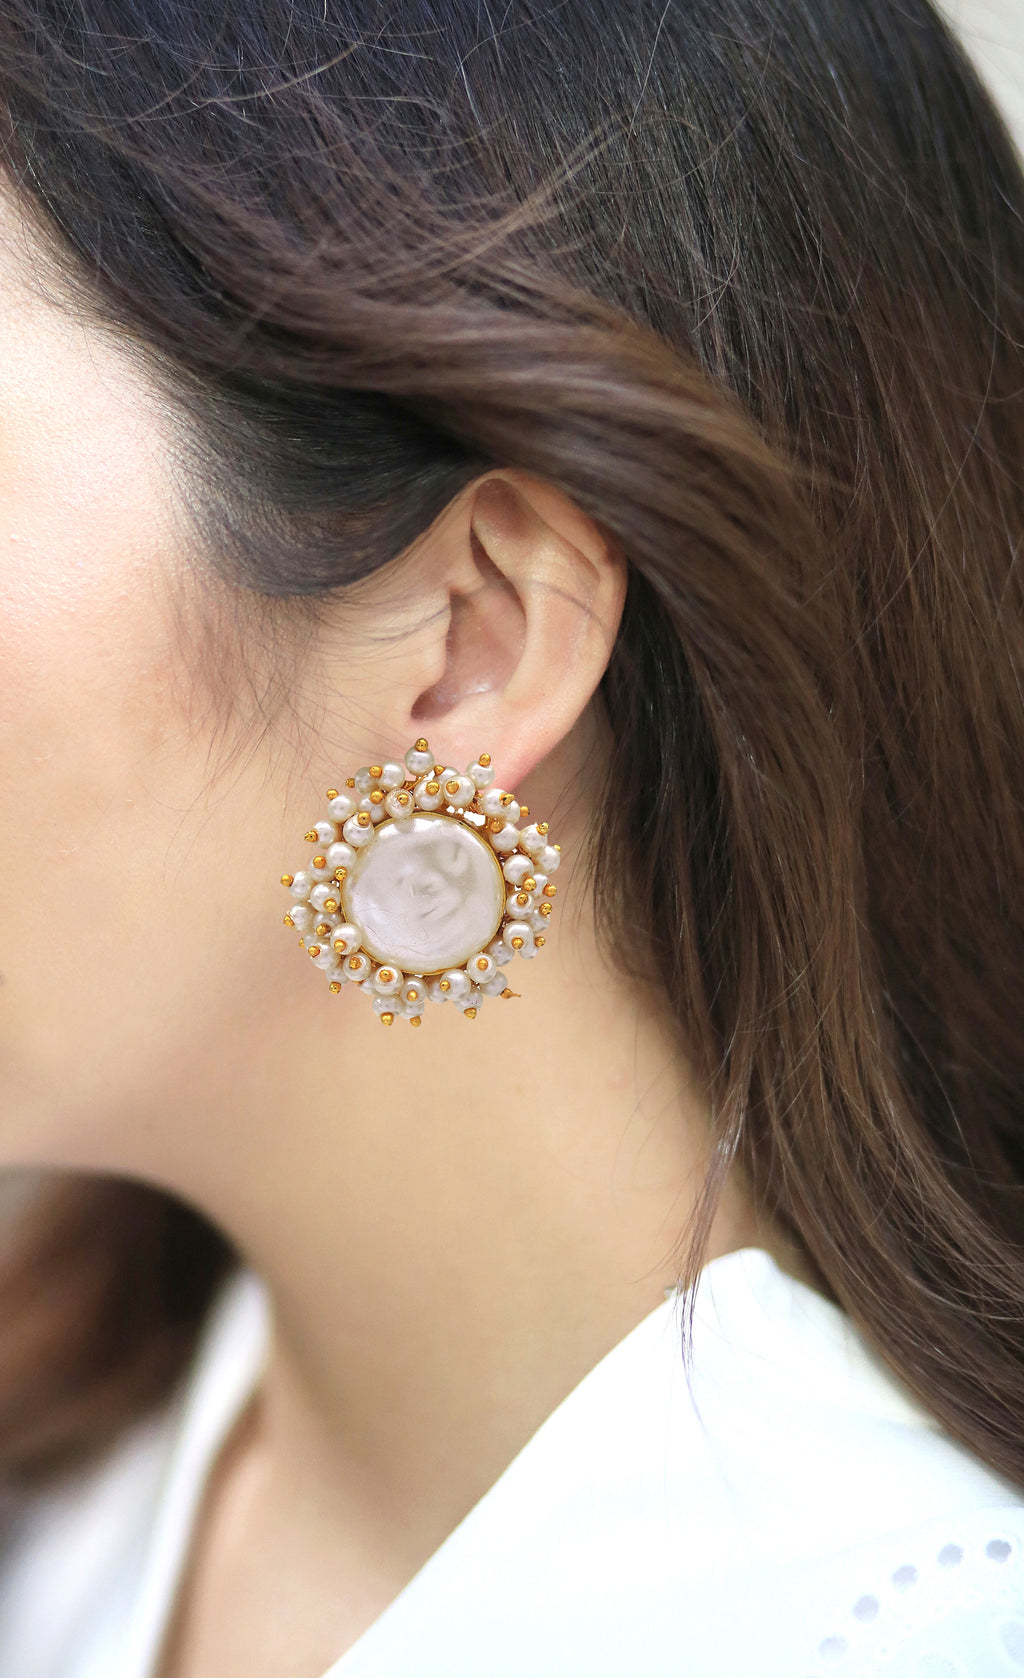 Baroque Pearl Bloom Earrings - Statement Earrings - Gold-Plated & Hypoallergenic Jewellery - Made in India - Dubai Jewellery - Dori